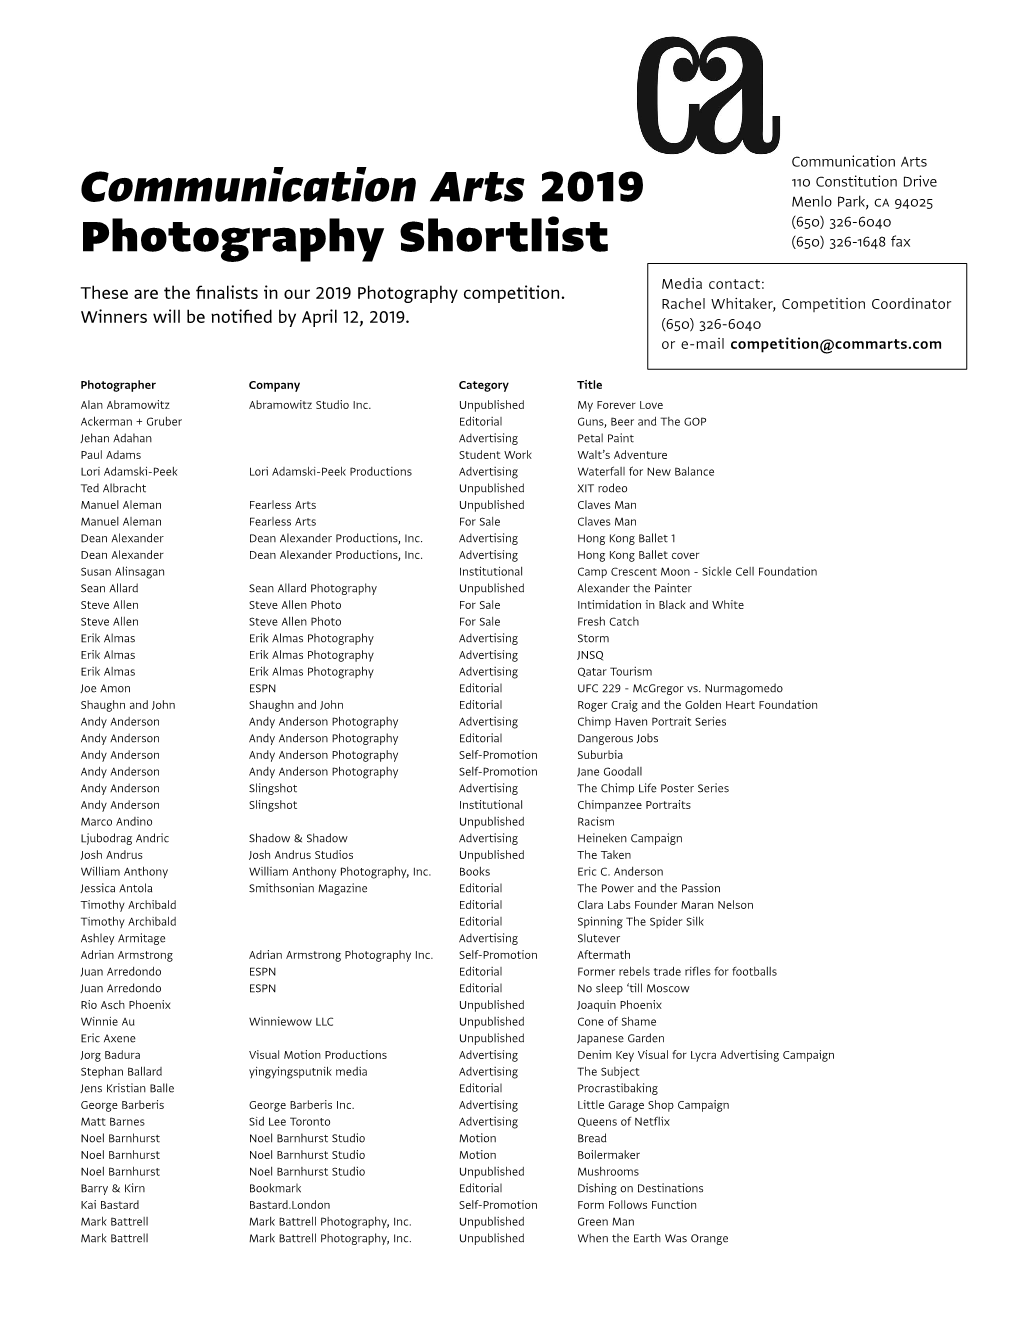 Communication Arts 2019 Photography Shortlist